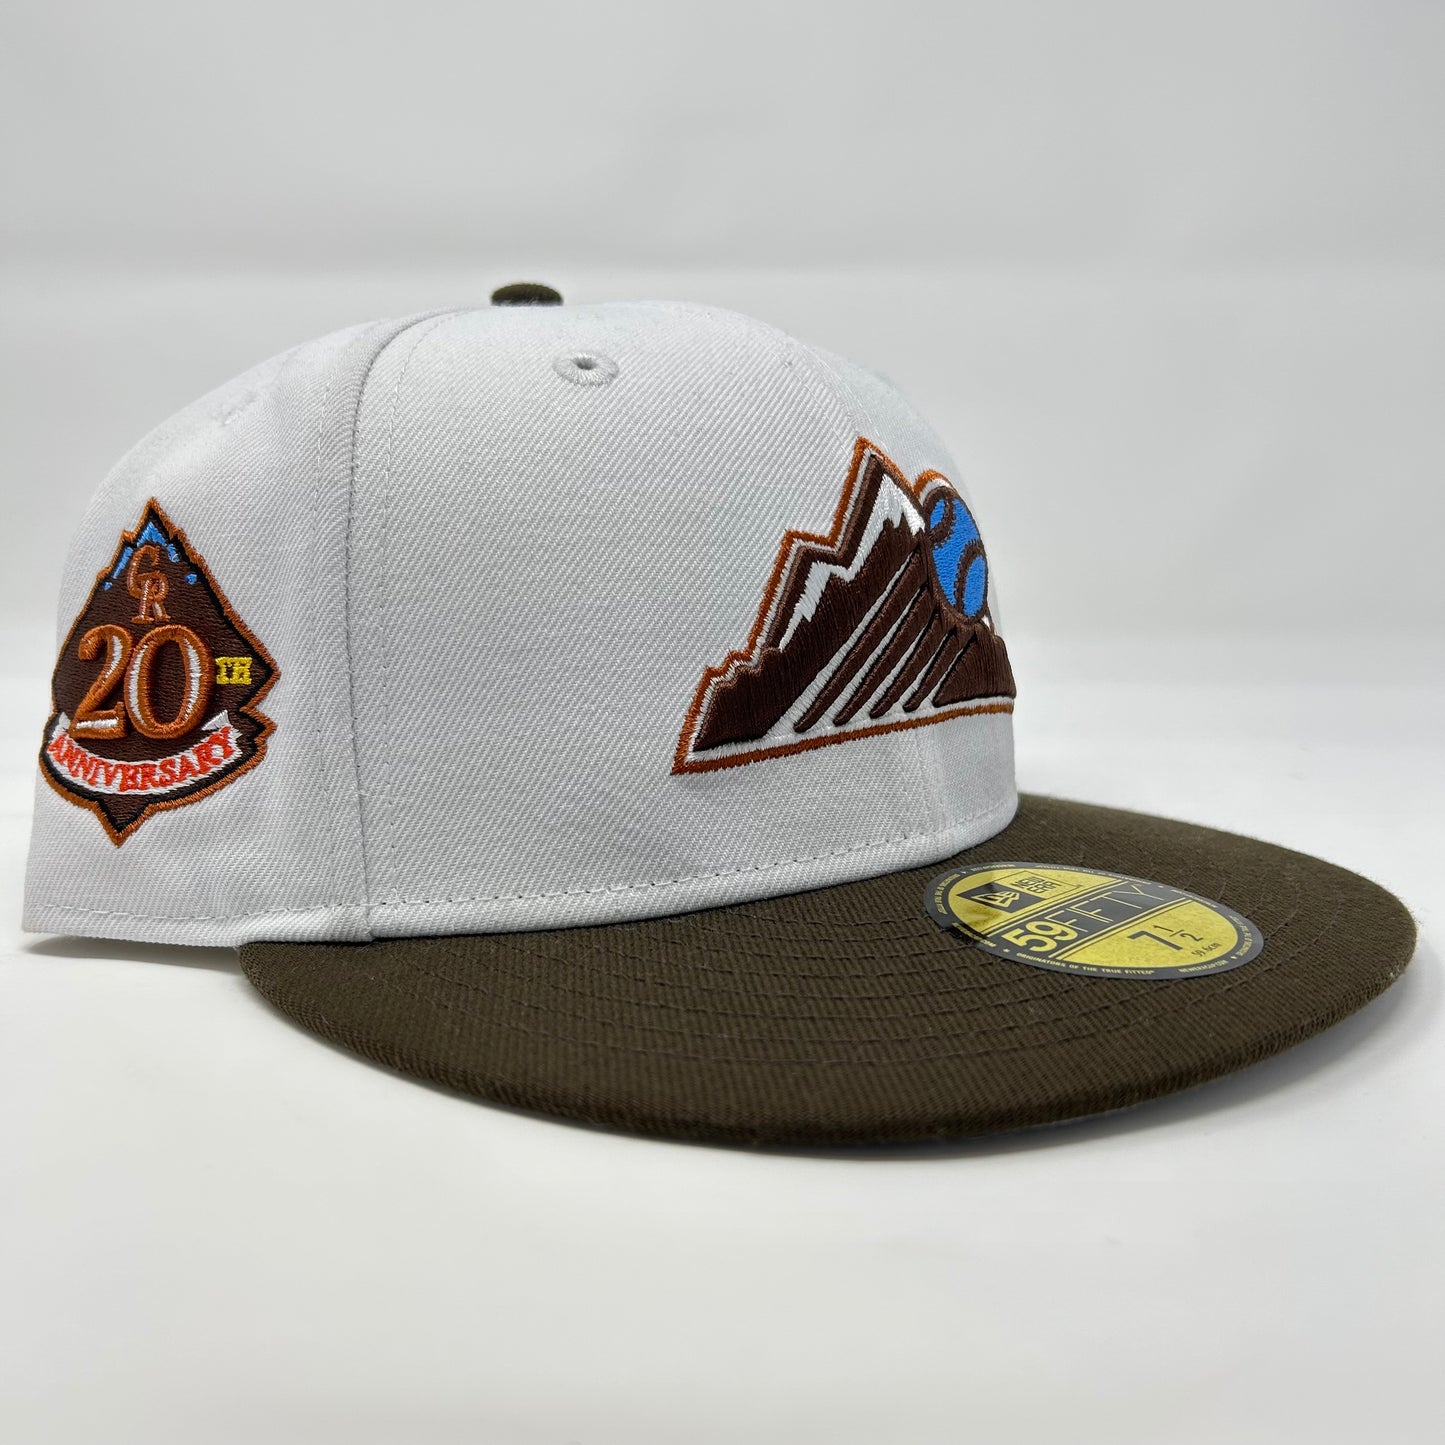 Colorado Rockies "Cereal Pack" Hat